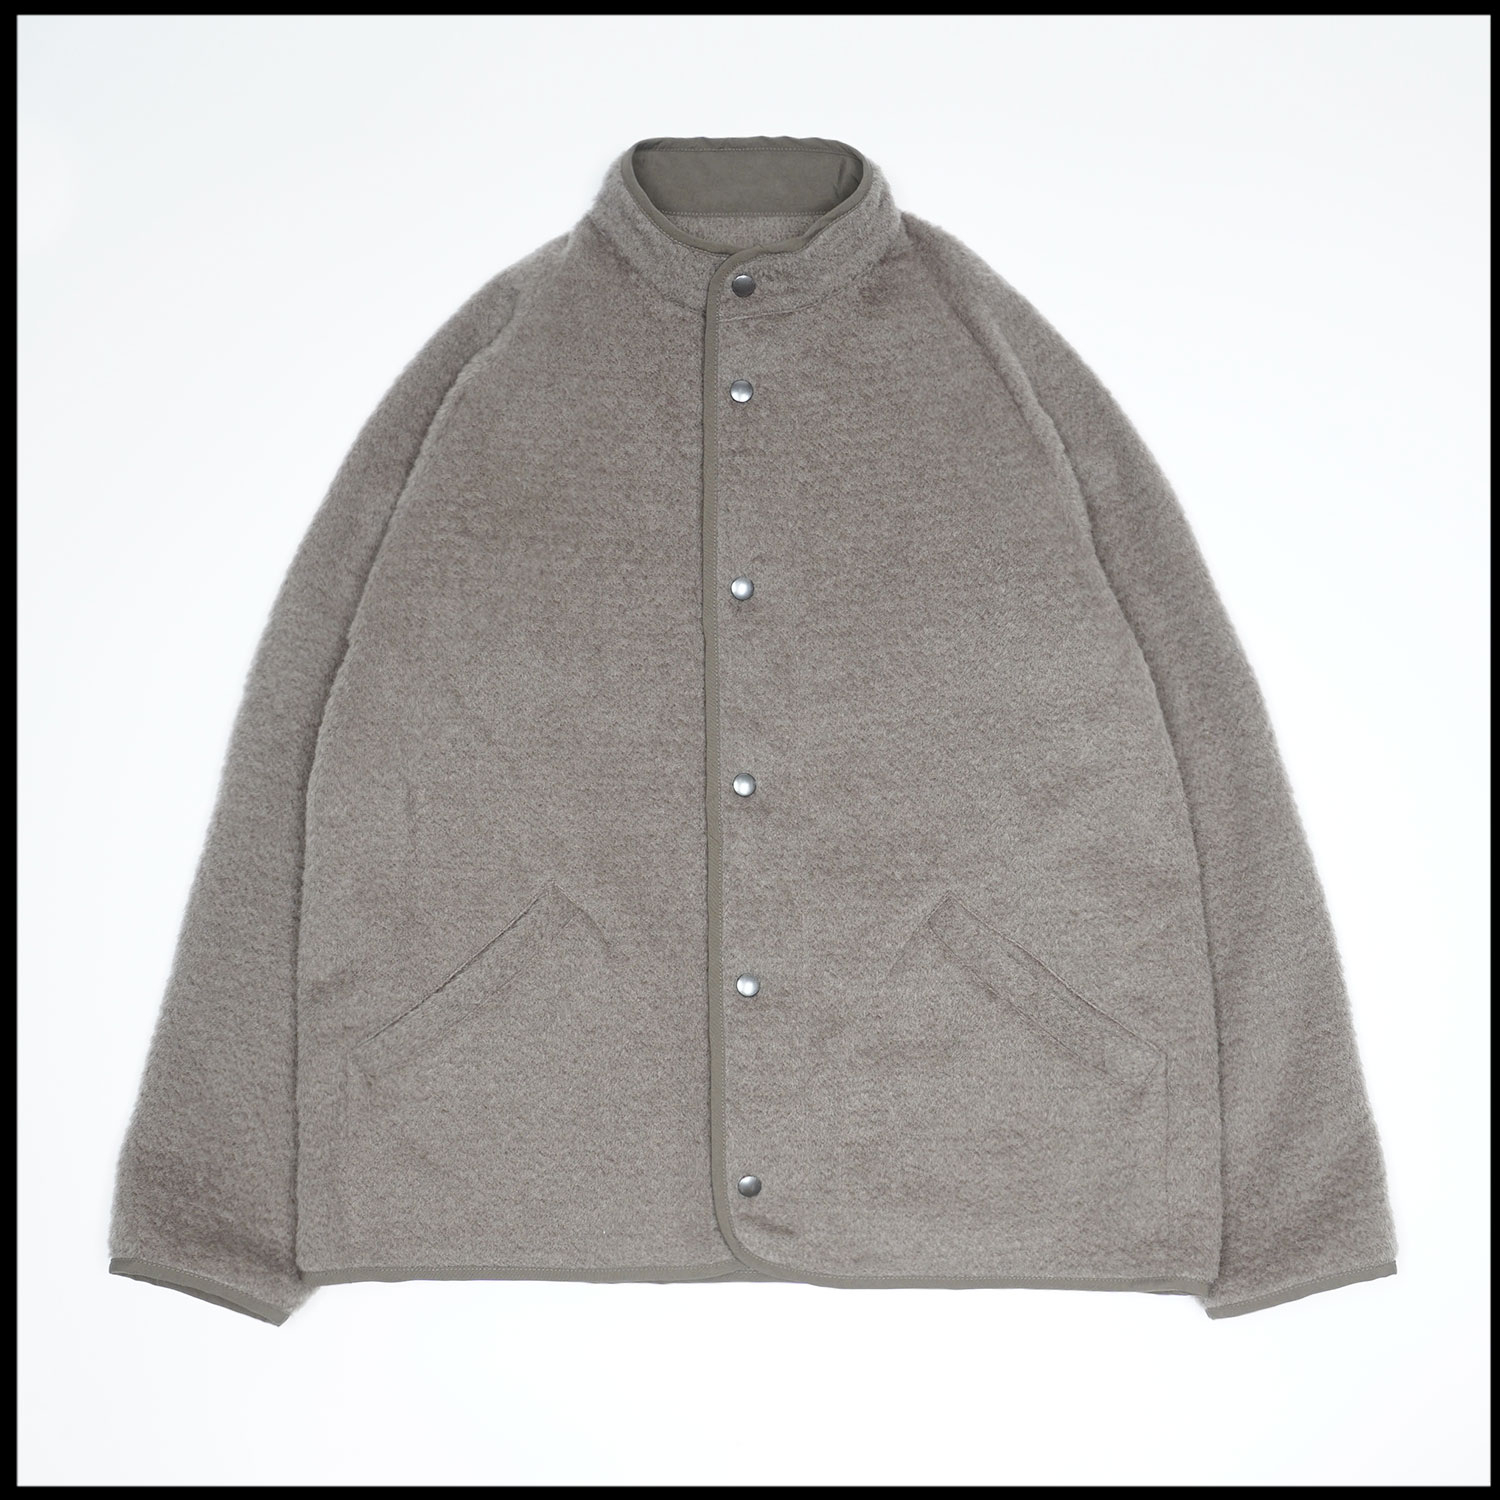 CONTOUR W Jacket in Warm grey color by Arpenteur